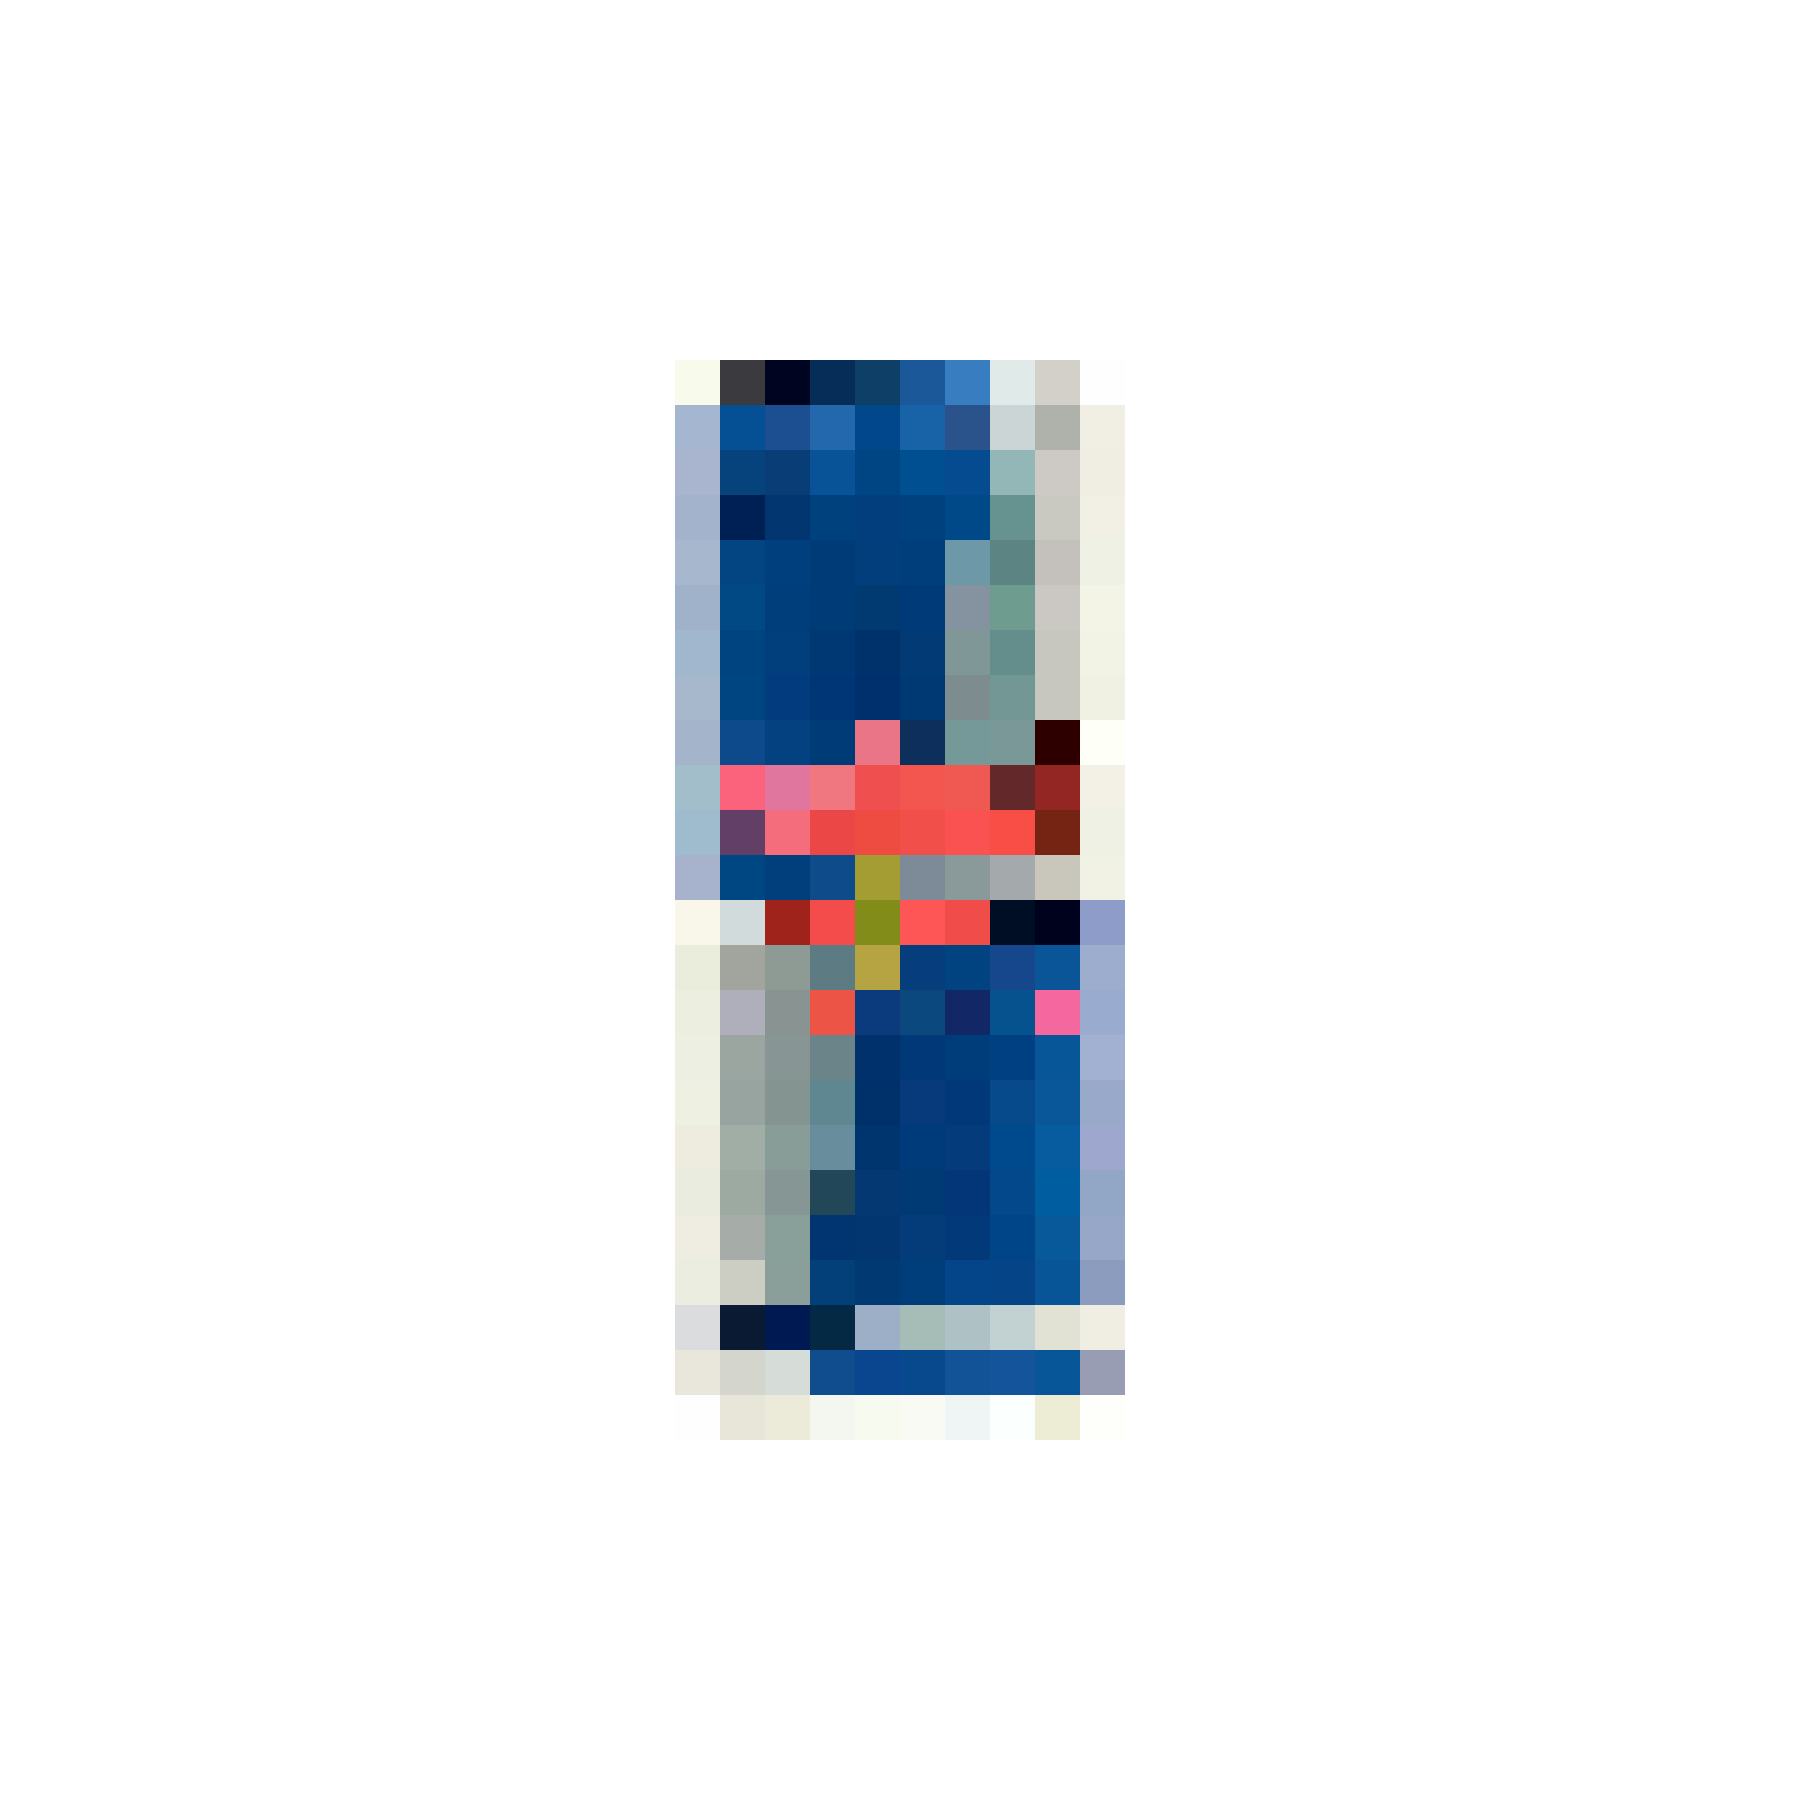 Per rimanere svegli: Red Bull Energy-Drink, 25 cl, fr. 1.50, da Coop.